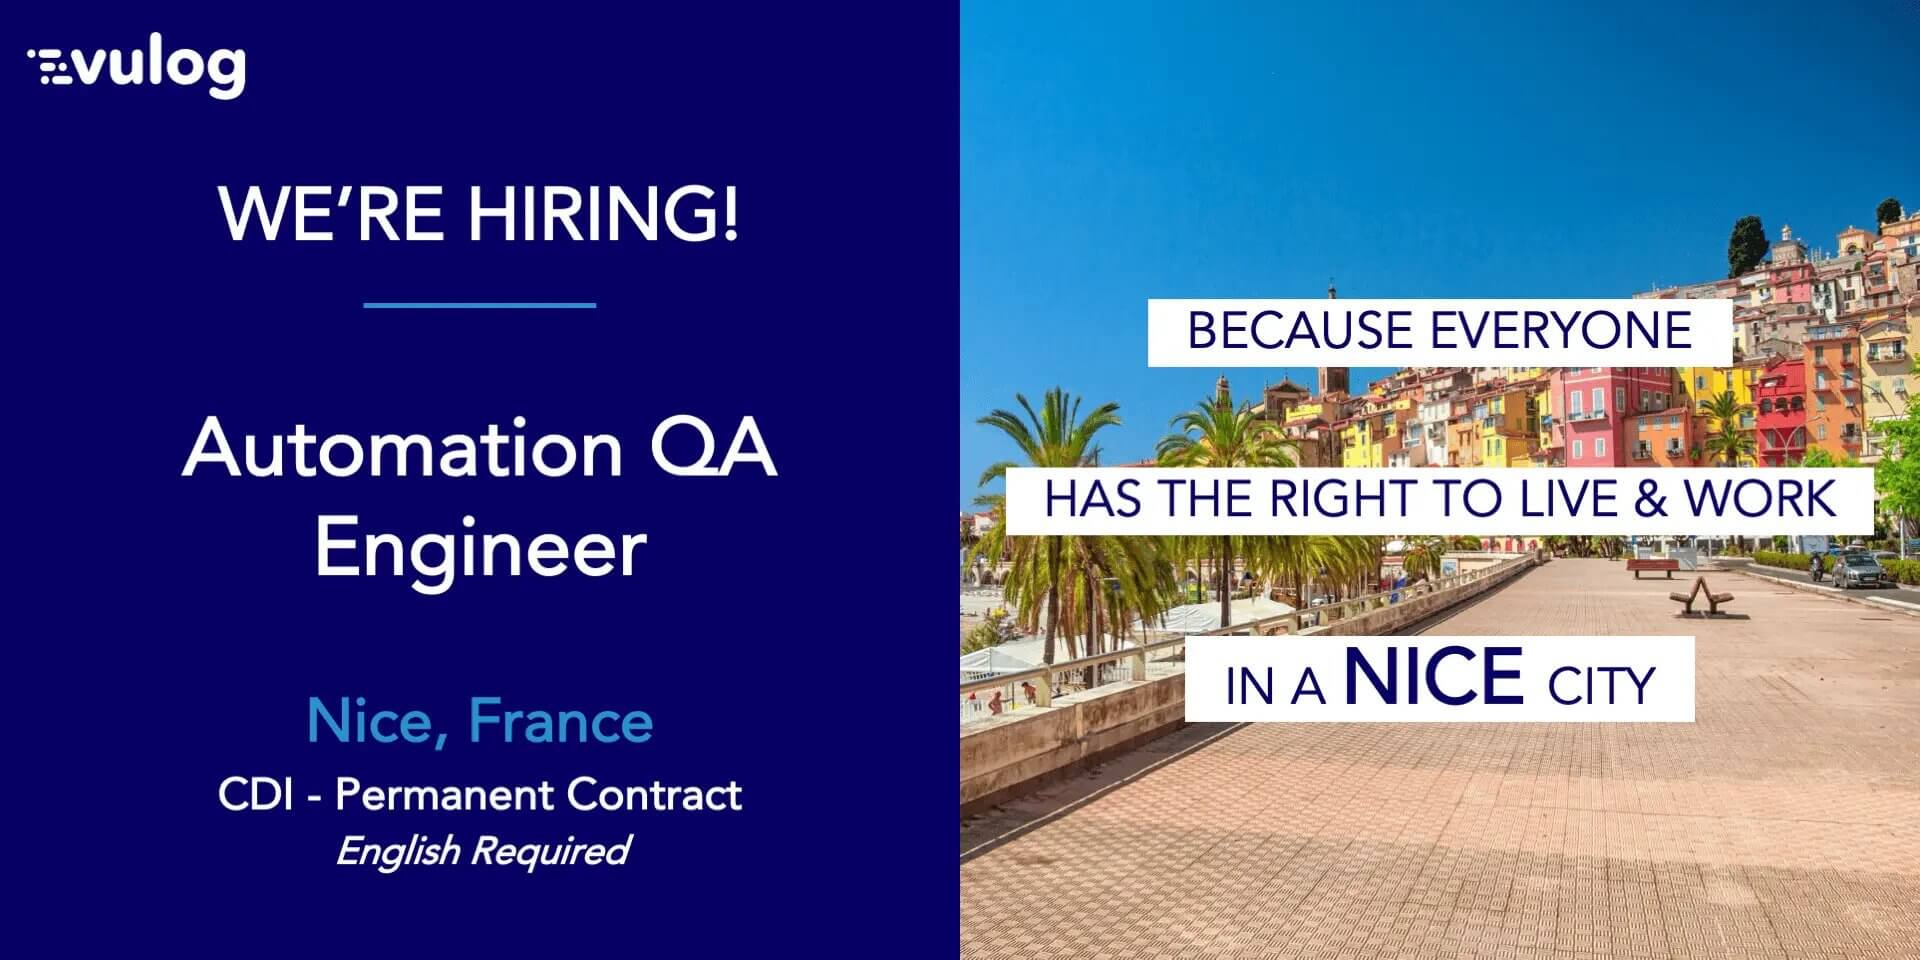 Vulog hiring Automation QA Engineer in Nice